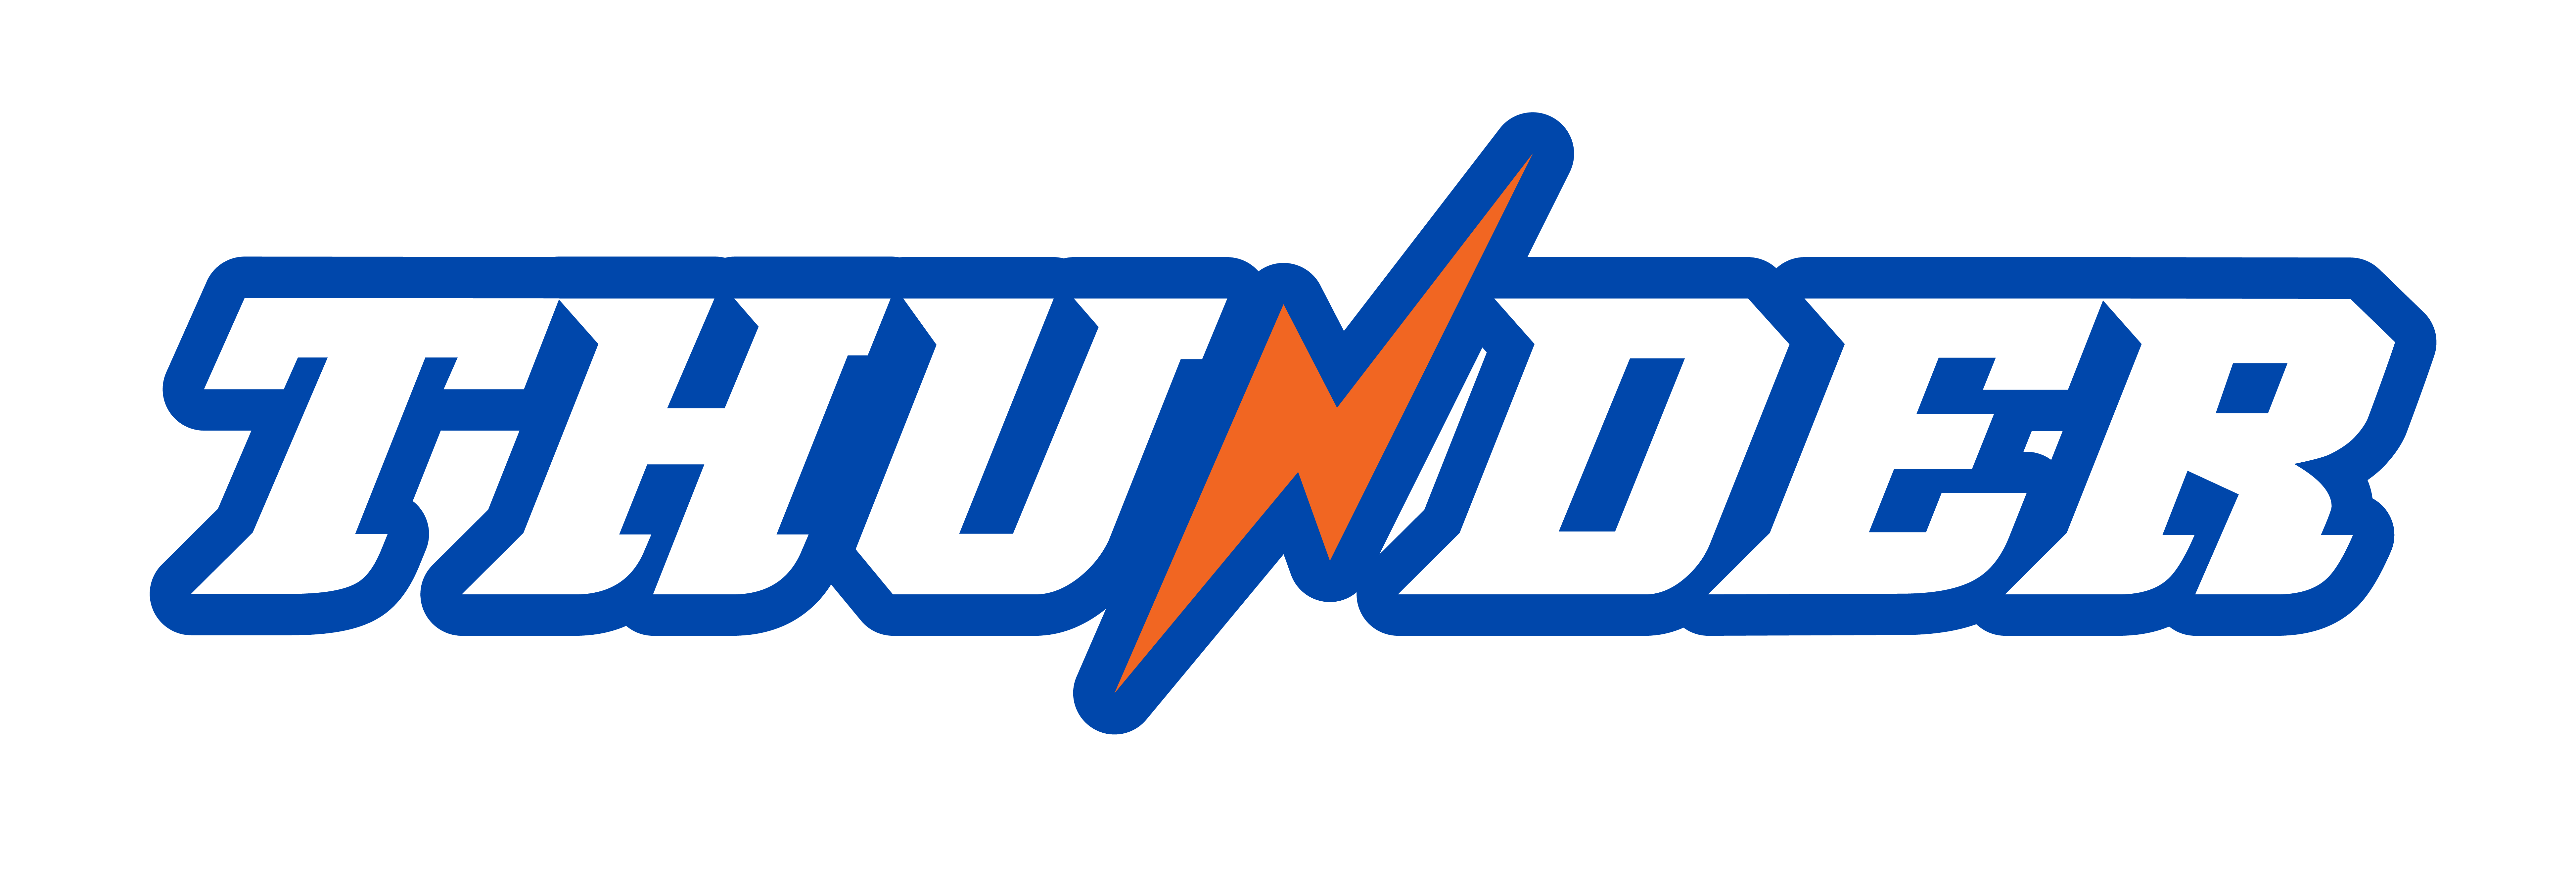 Thunder-Lacrosse-logo-Primary